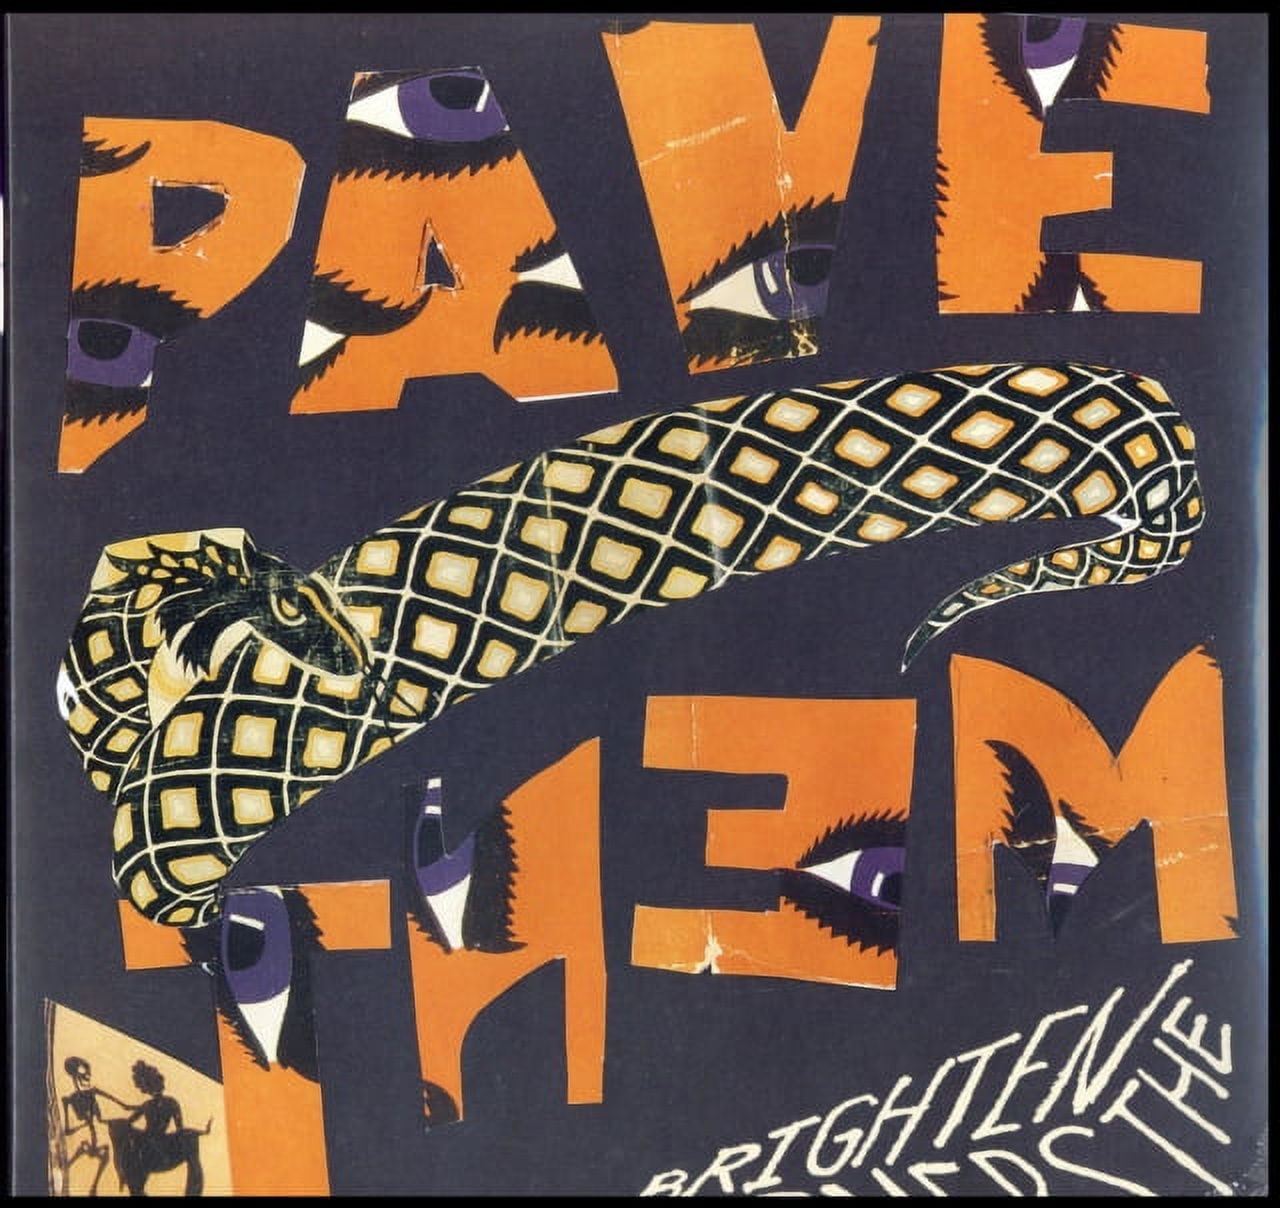 Pavement - Brighten The Corners - Vinyl